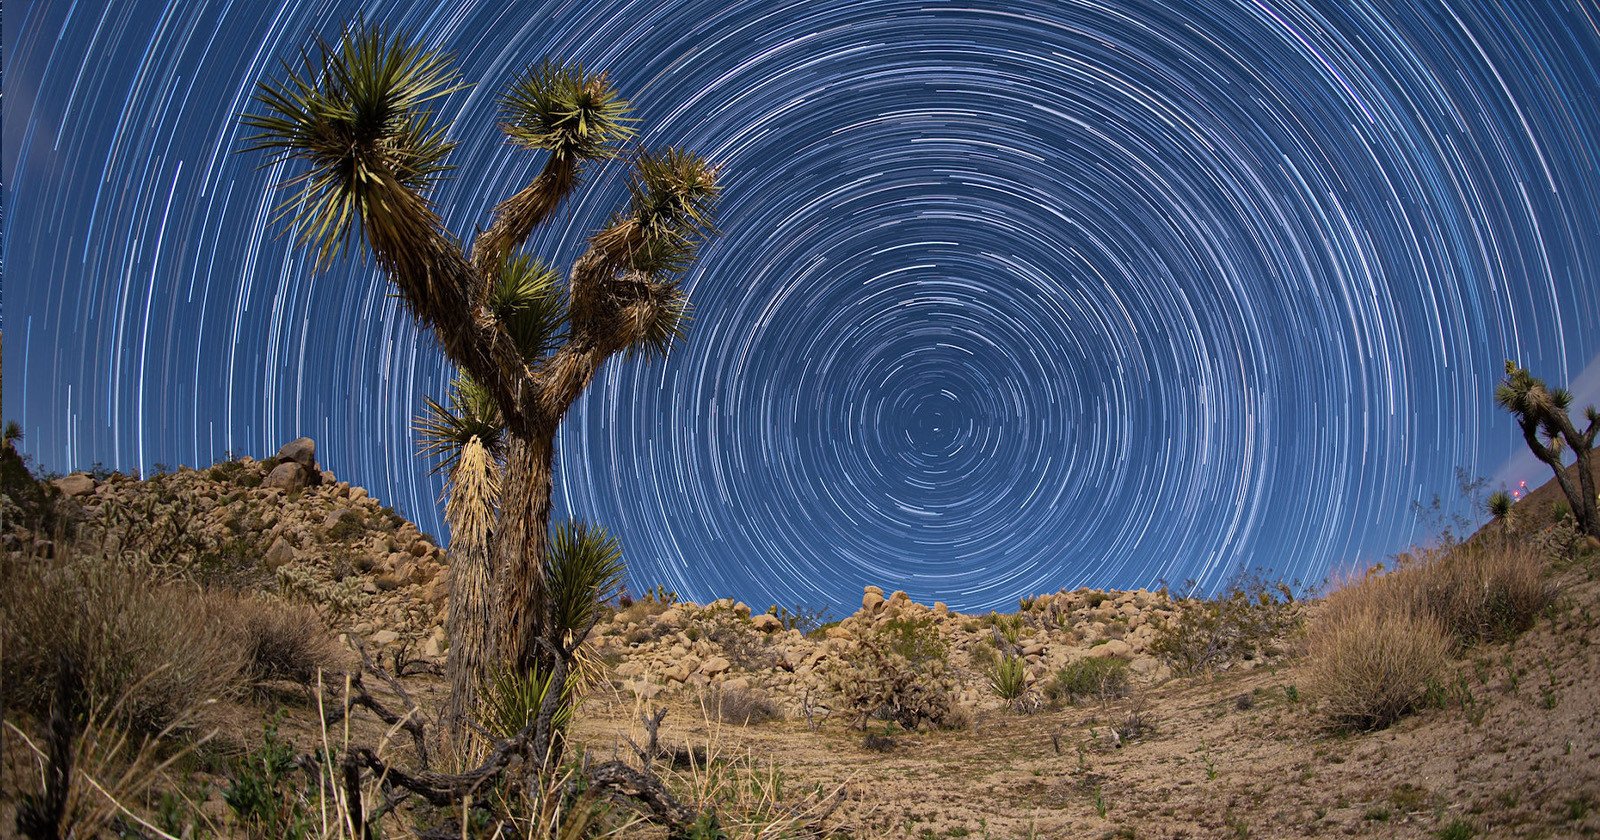 A Star Trail Timelapse of the Mojave Desert Shot Under a Full Moon